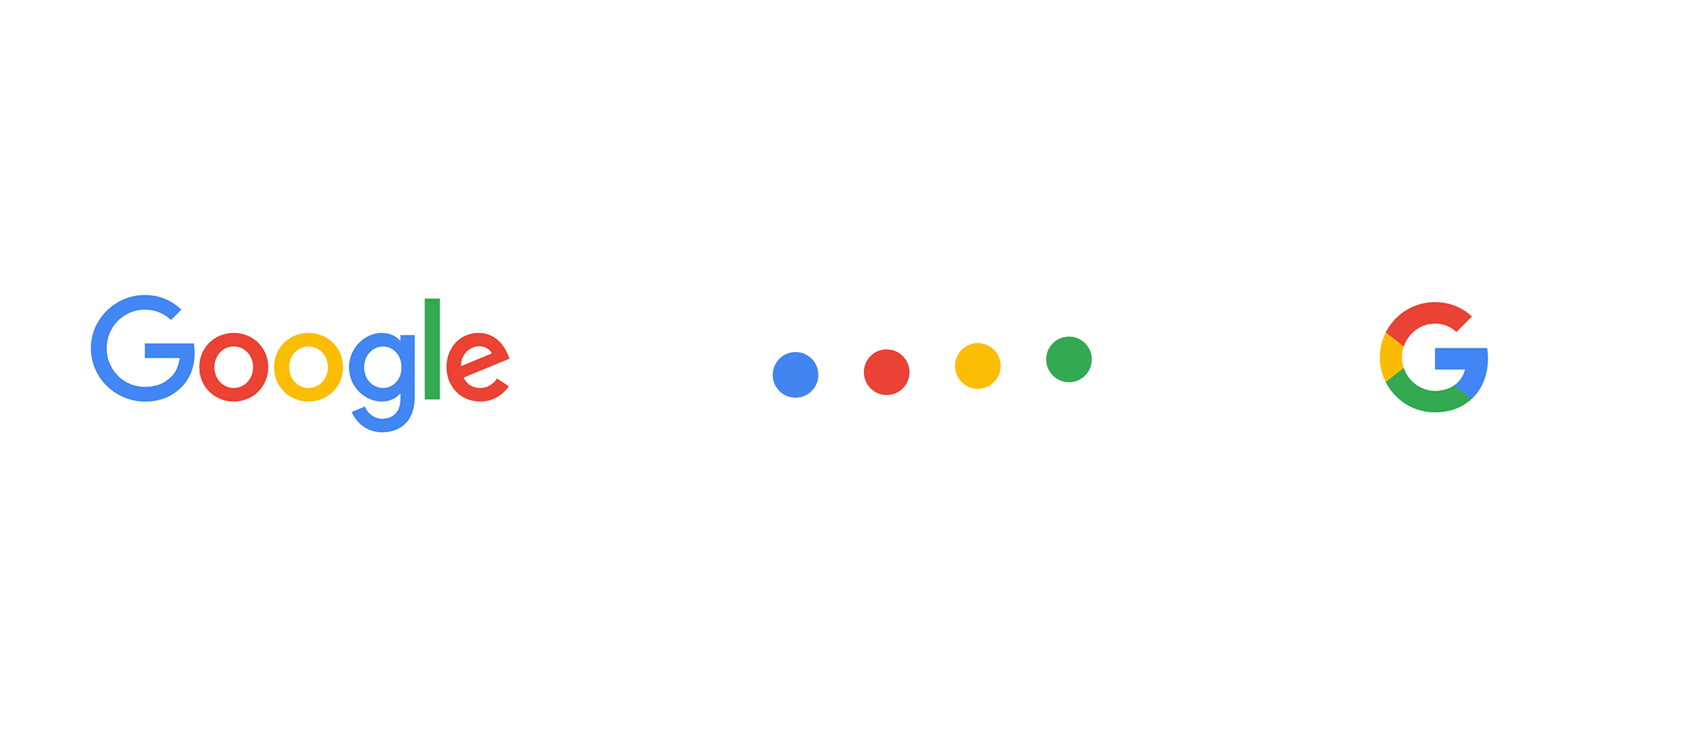 Goole Logo - Evolving the Google Identity - Library - Google Design